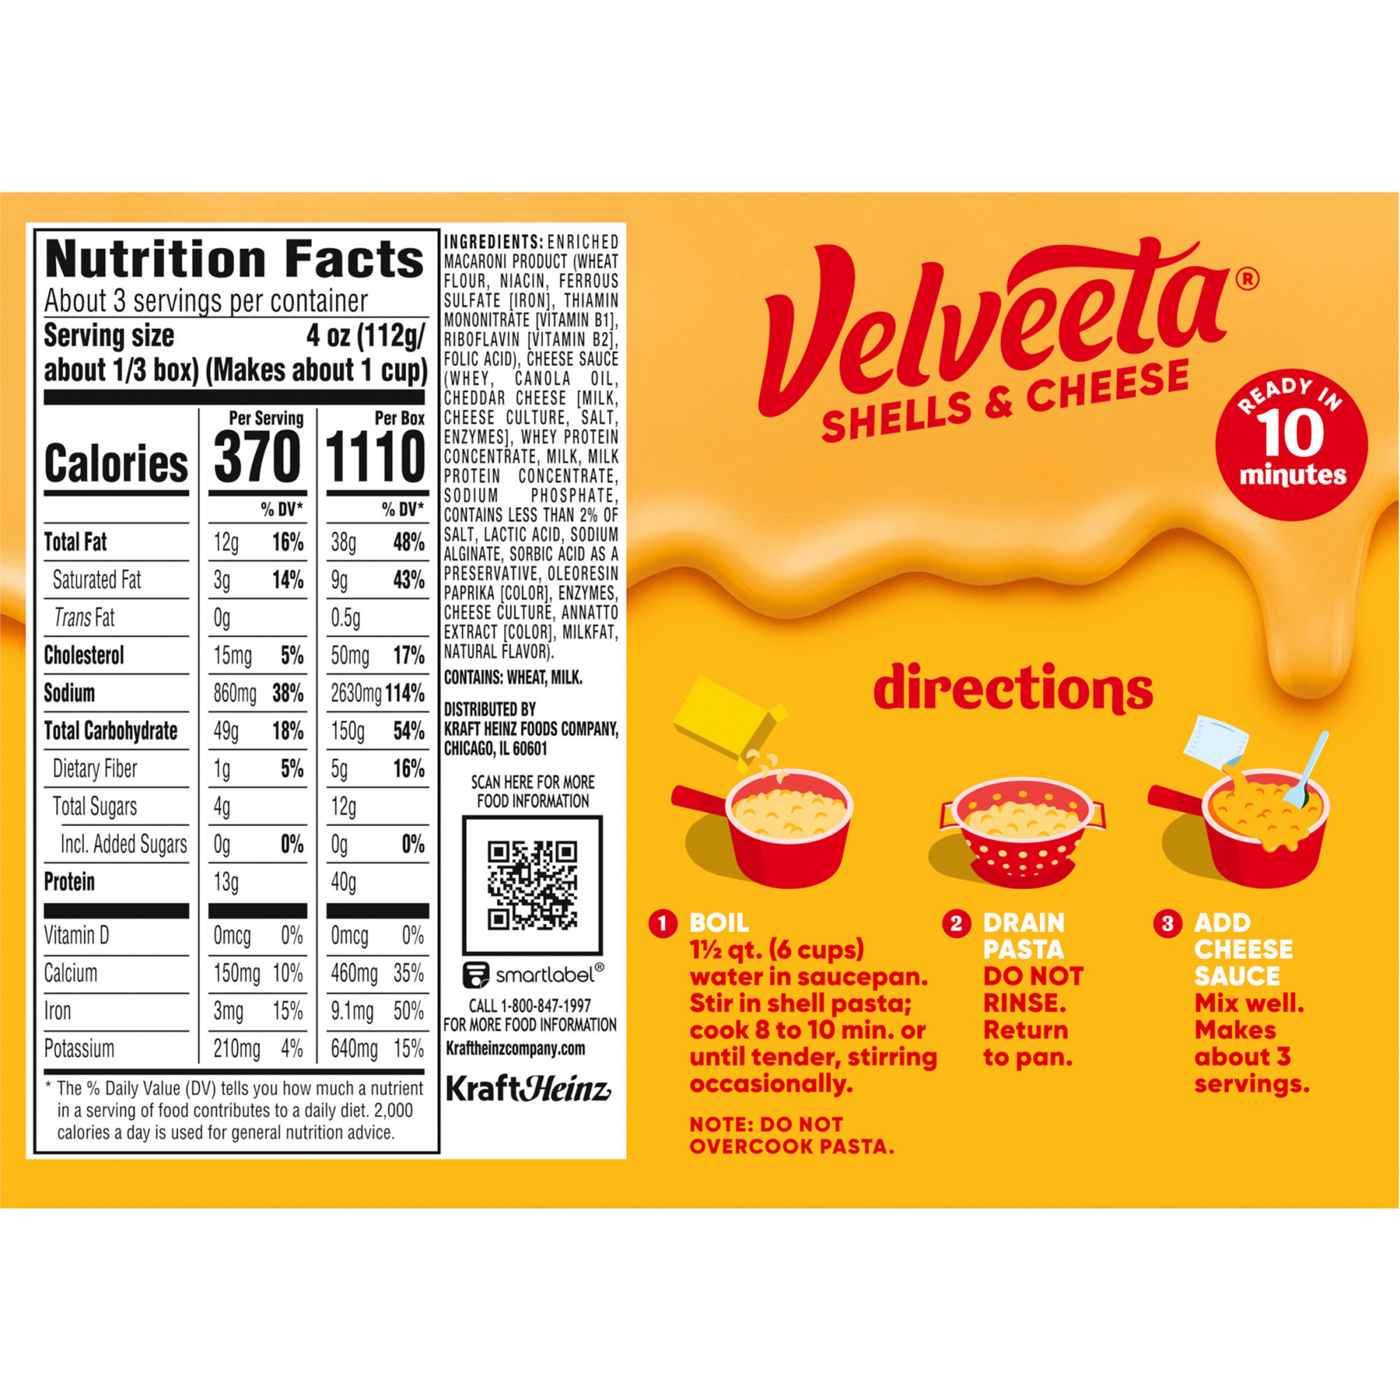 Velveeta Velveeta Original Shells & Cheese; image 9 of 9